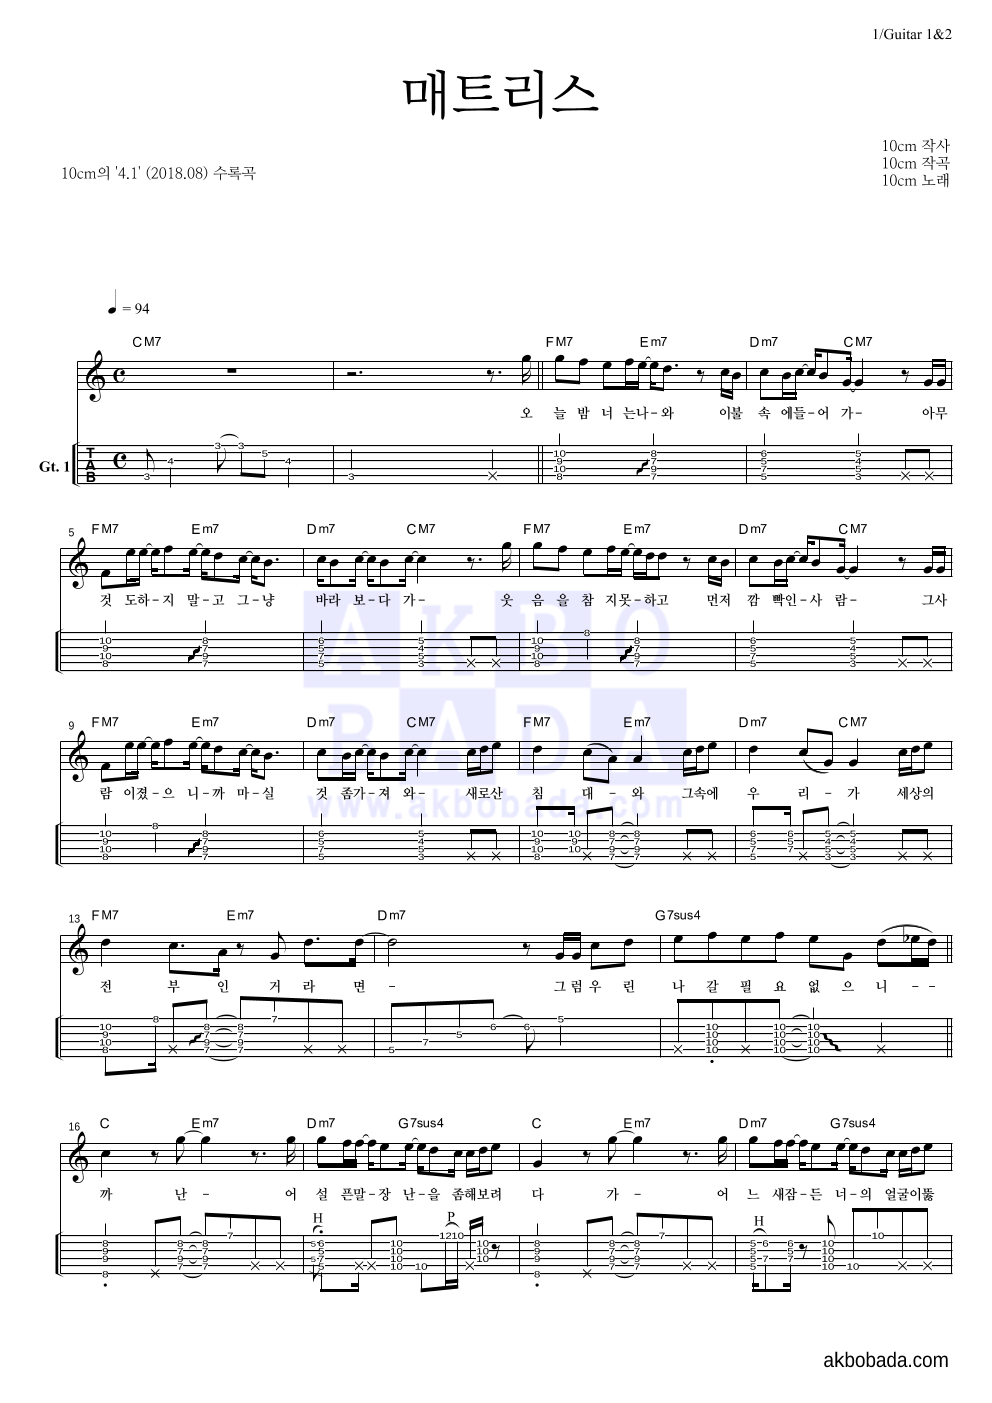 10CM - 매트리스 기타(Tab) 악보 